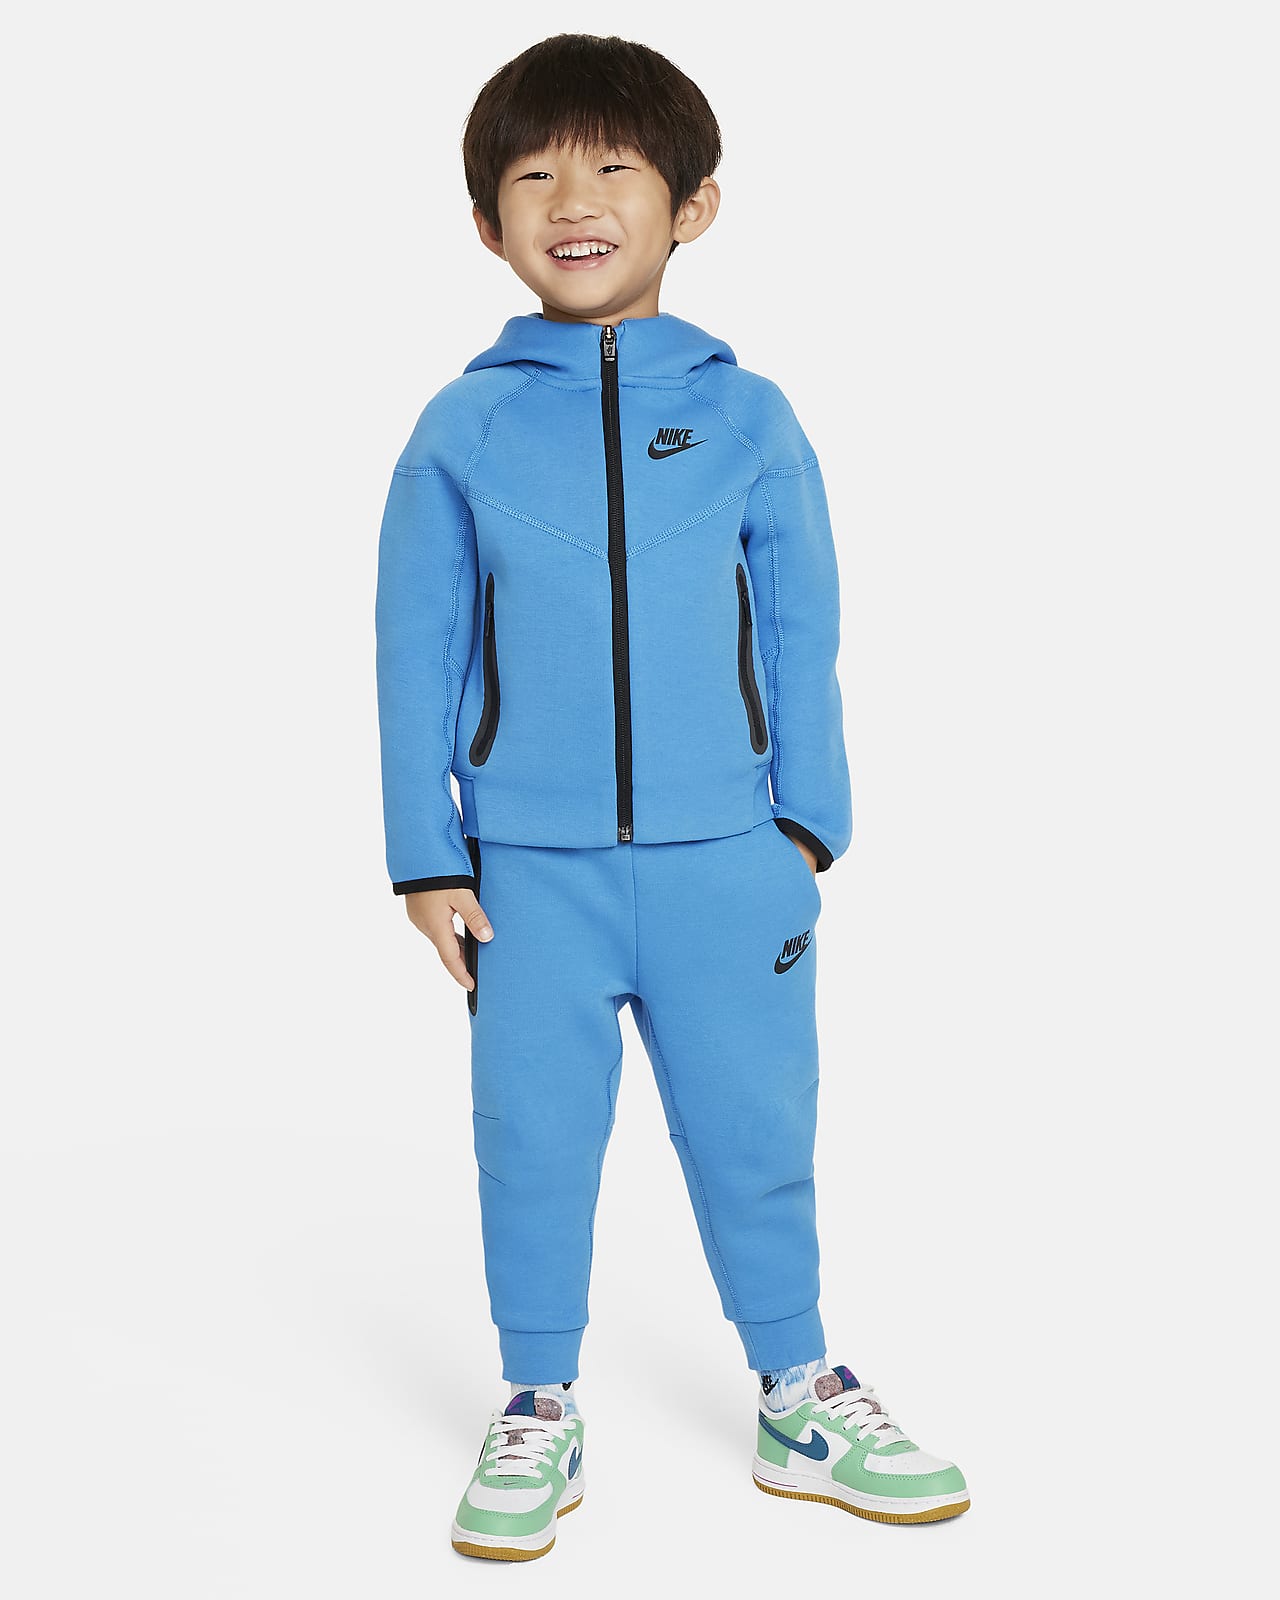 Nike Sportswear Tech Fleece Full-Zip Set Conjunt de dessuadora amb caputxa de dues peces - Infant